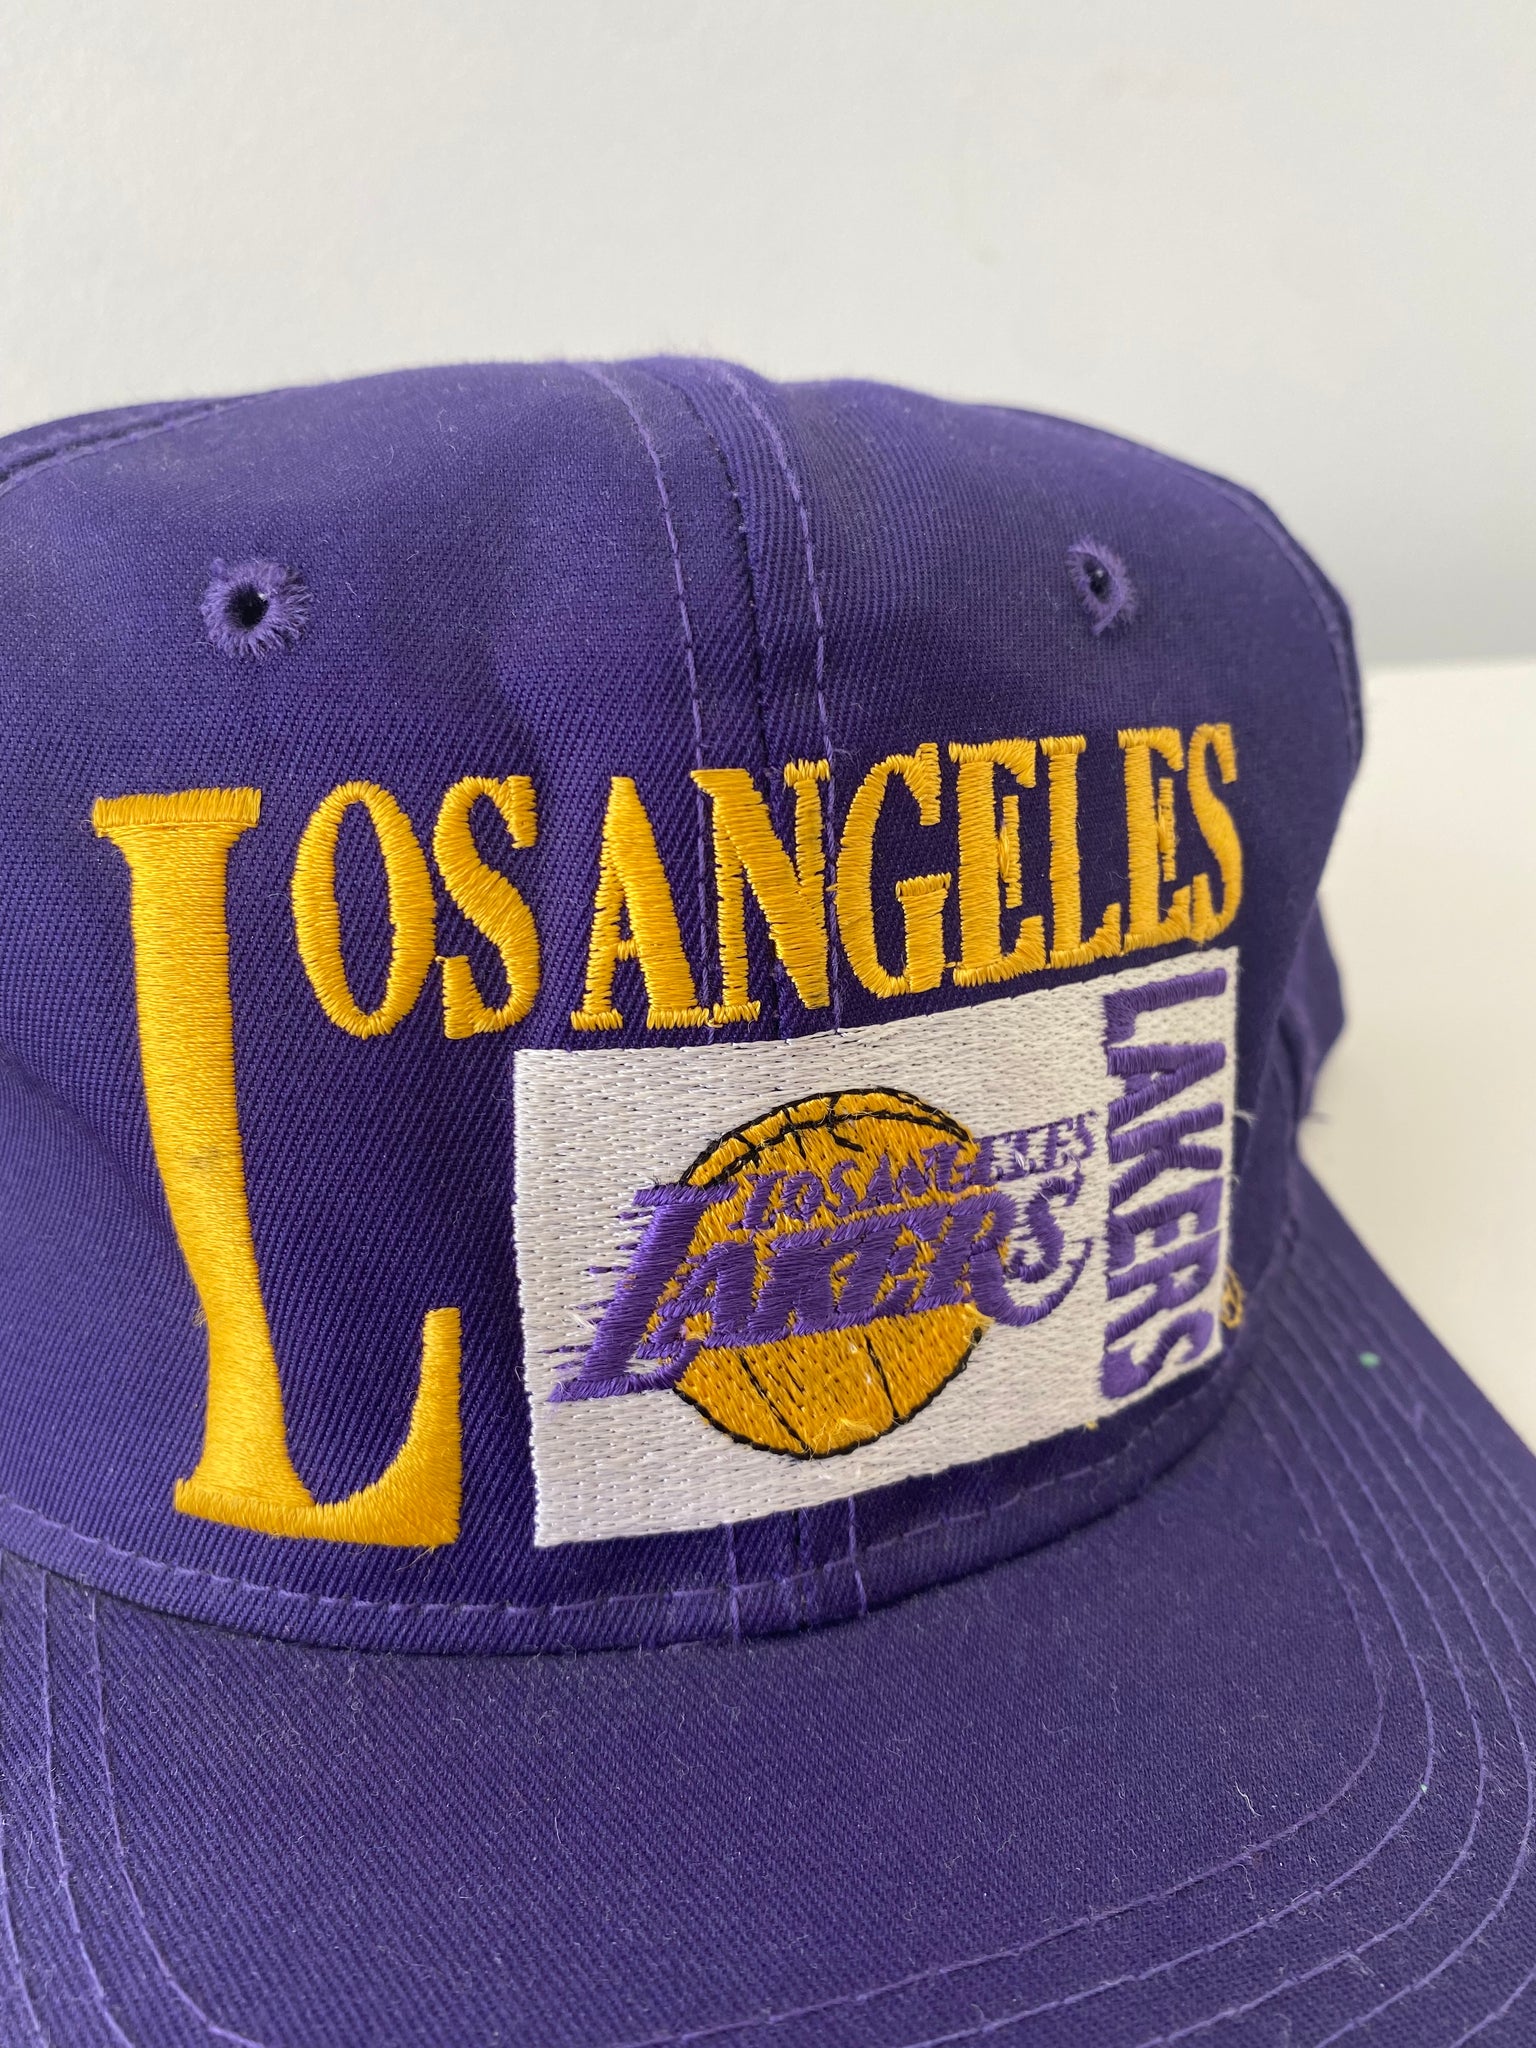 Vintage Lakers Snapback by Chalkline